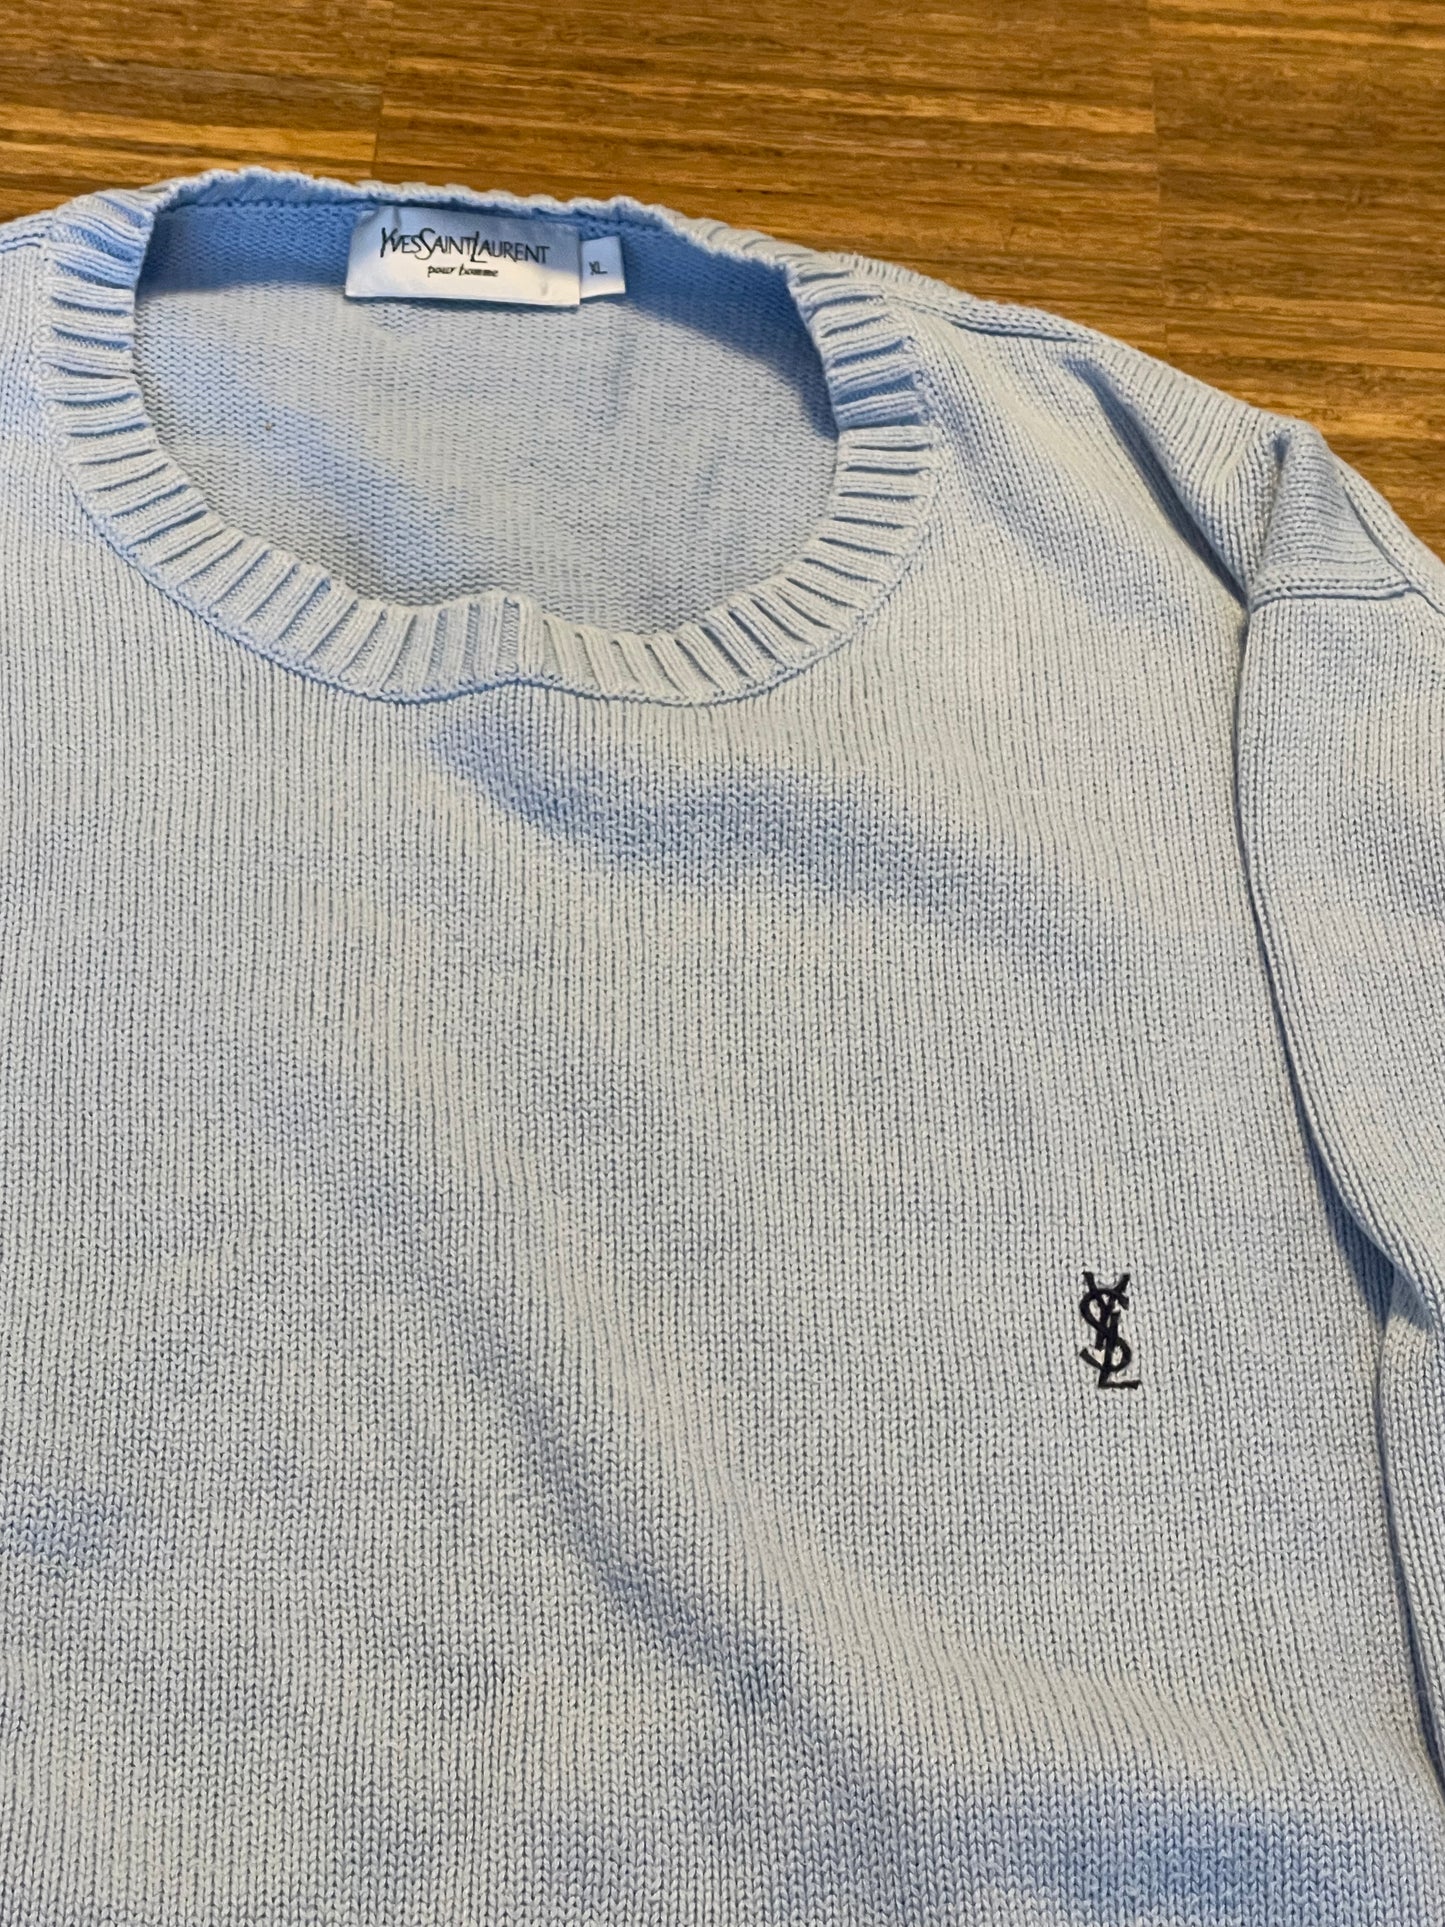 YSL Sweater (XL)